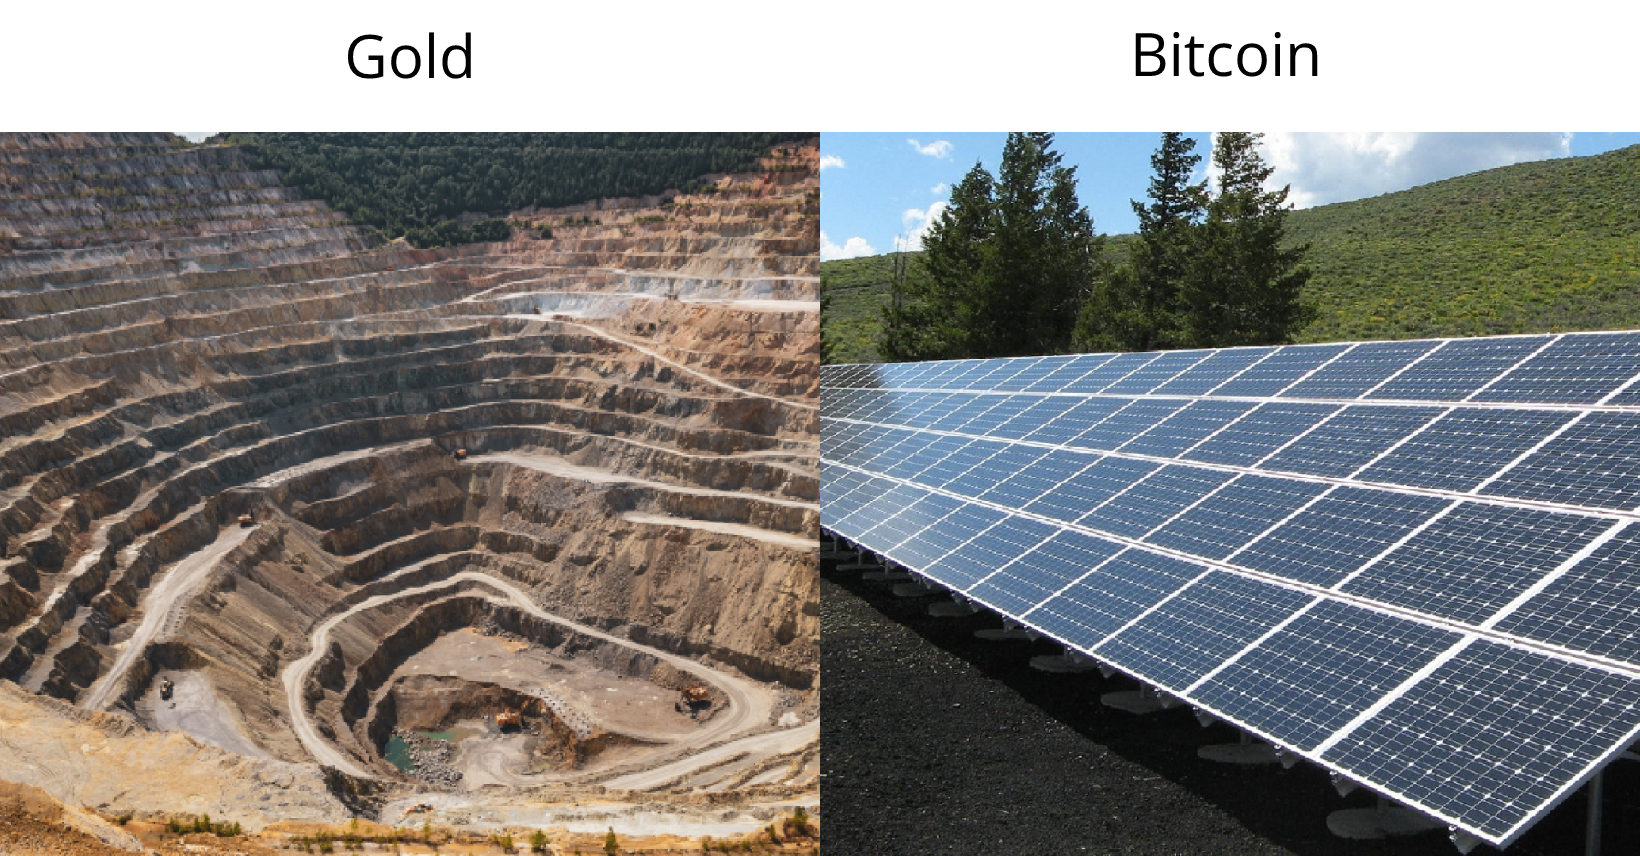 Gold vs Bitcoin